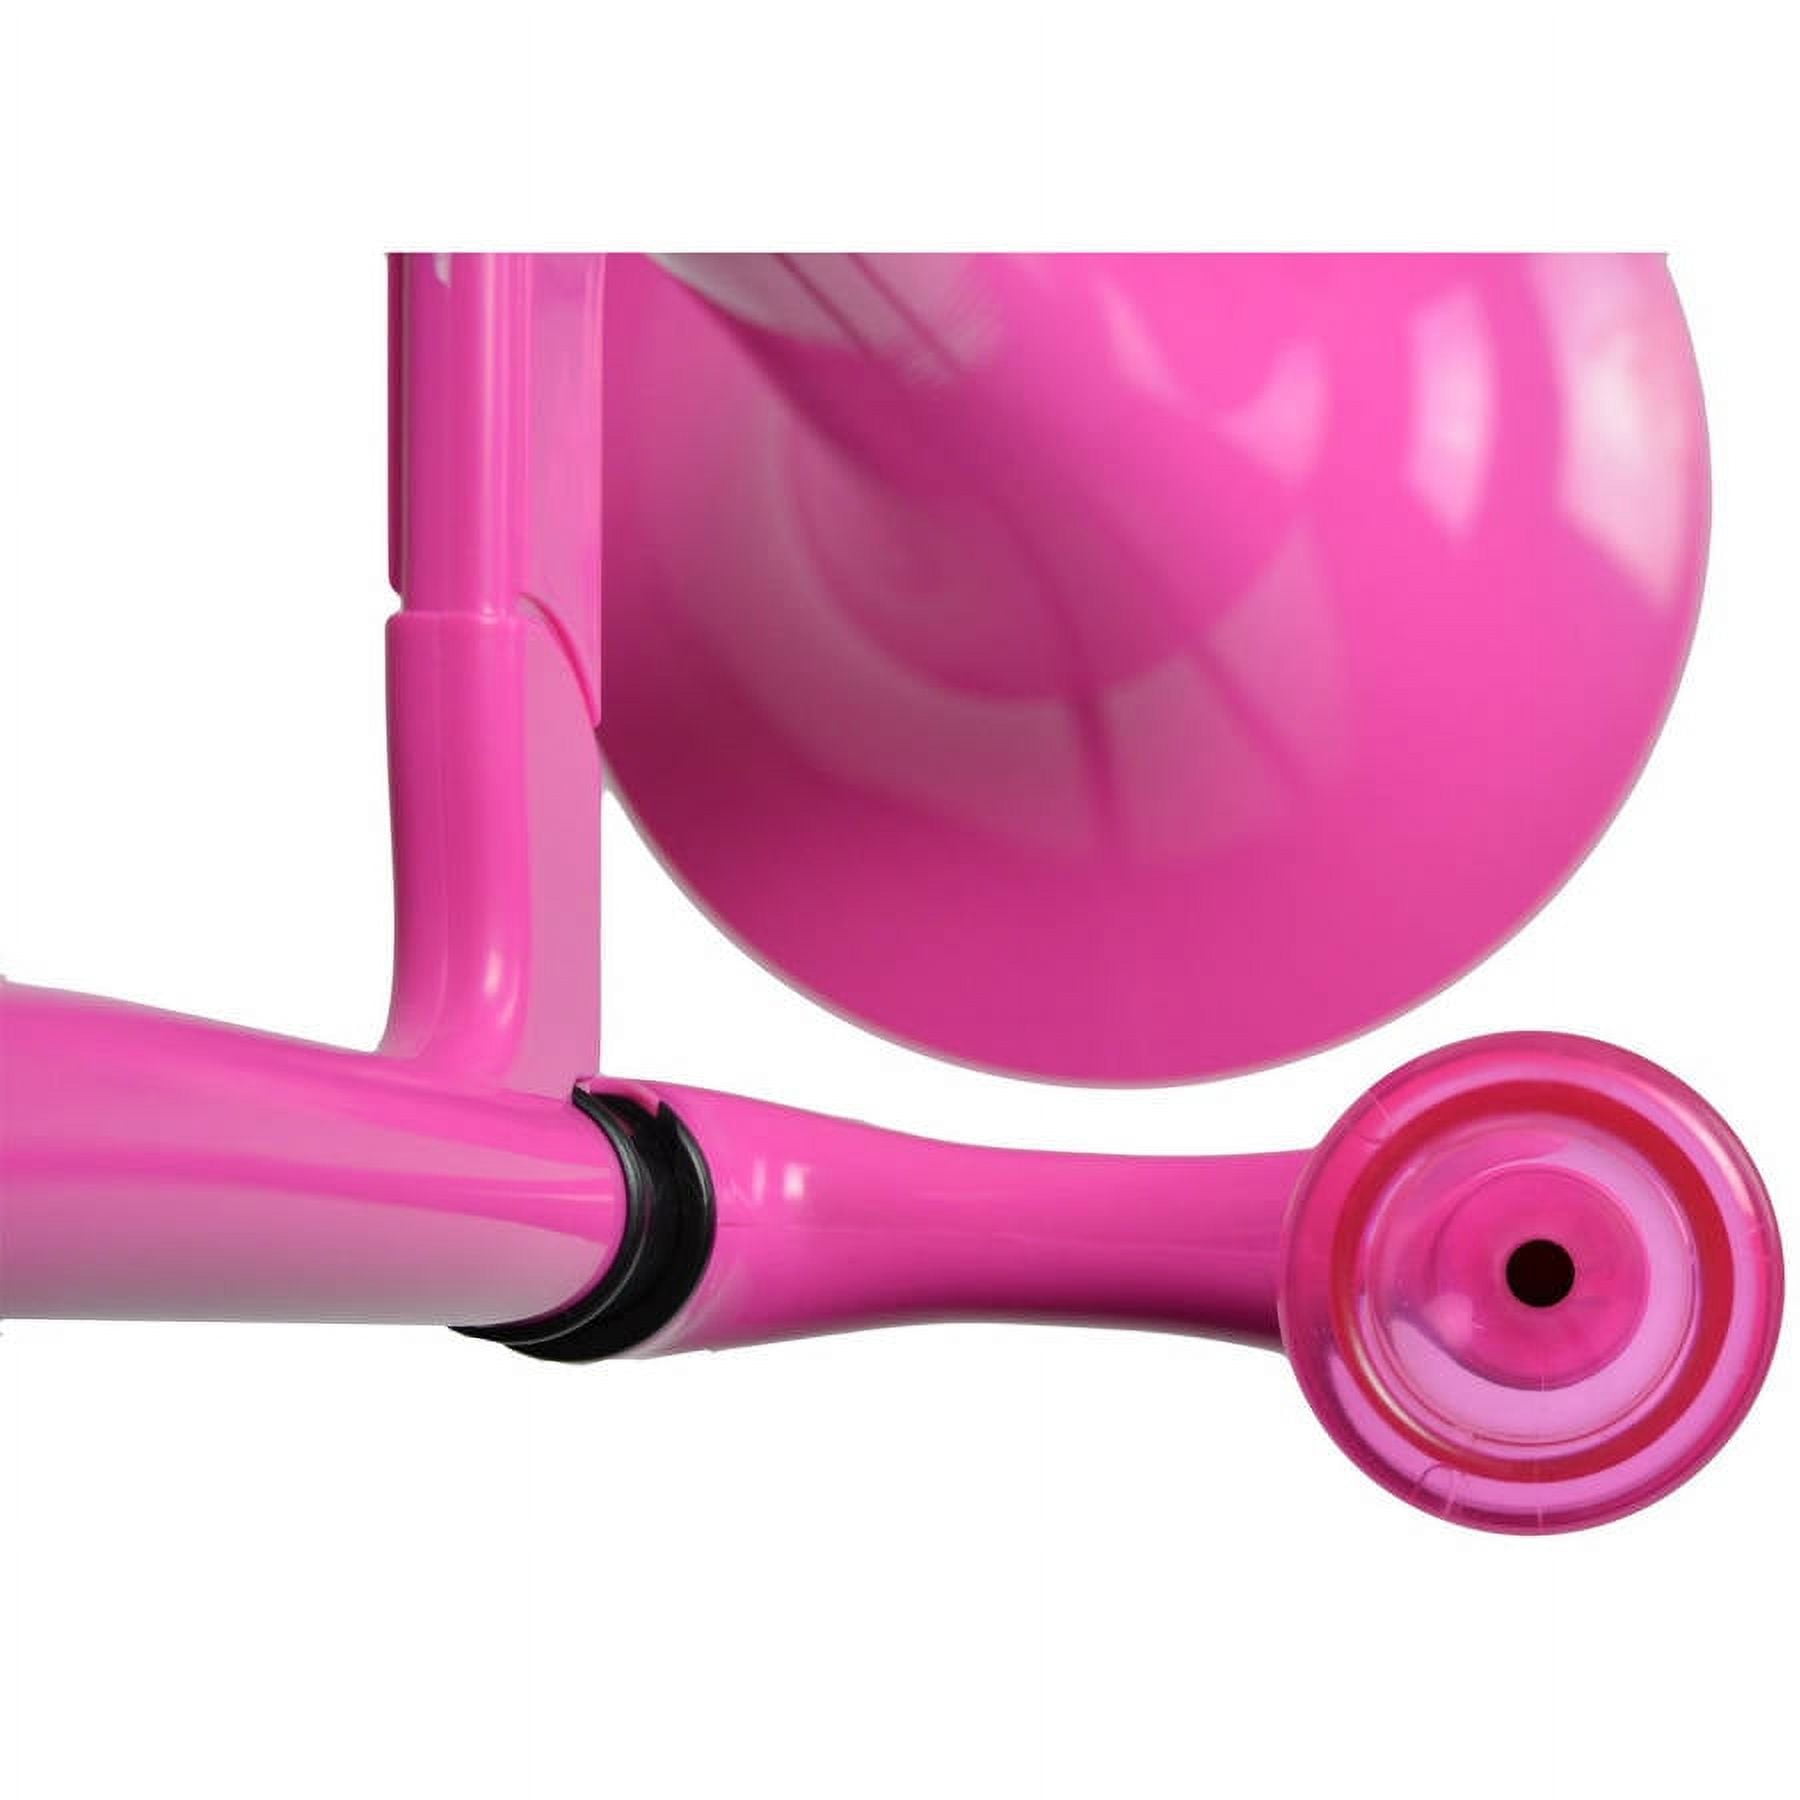 Jiggs pBone Plastic Trombone, Pink - Walmart.com